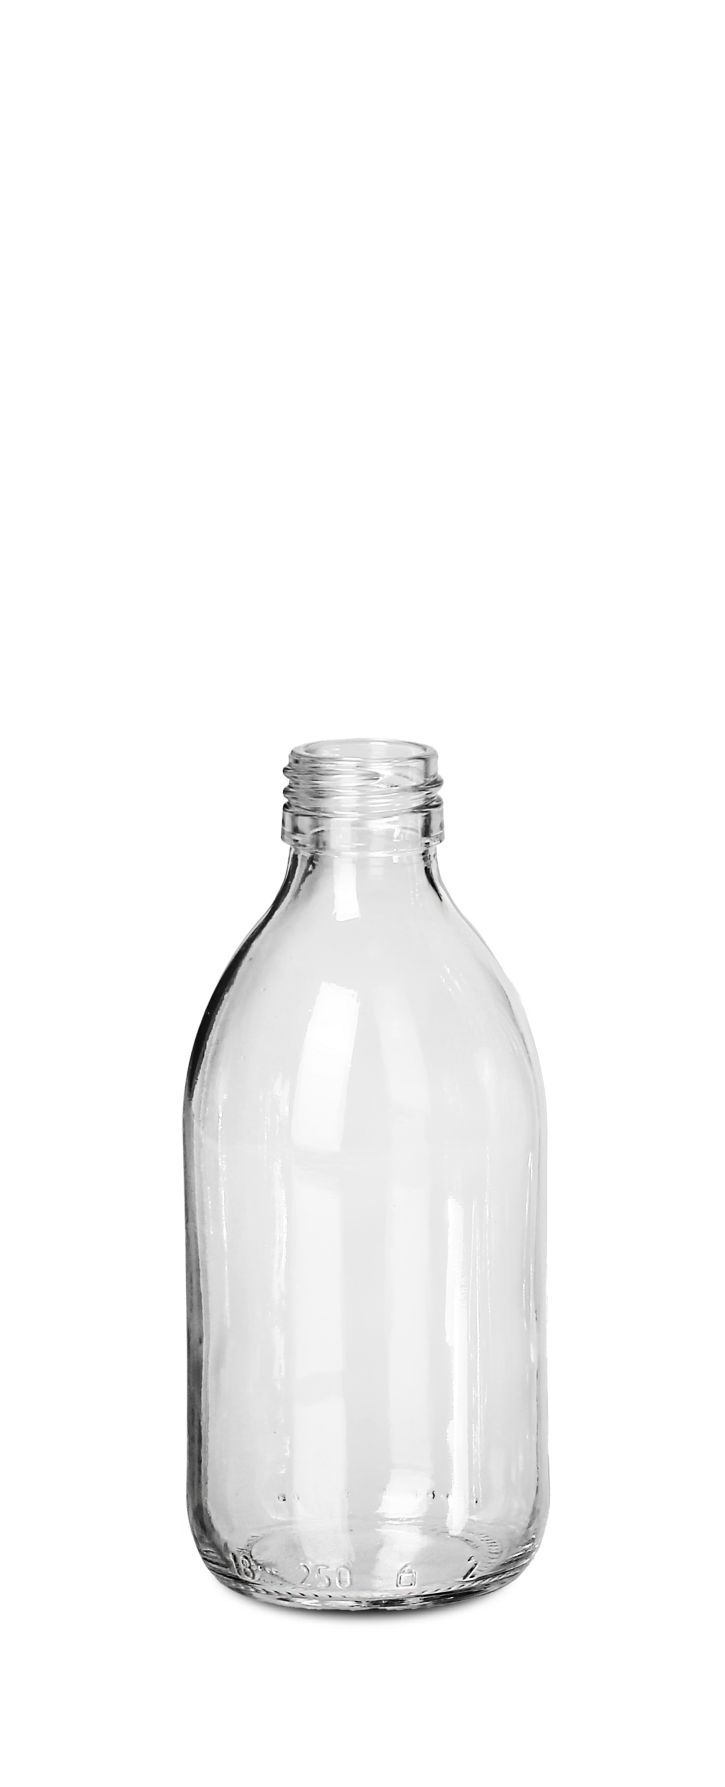 250 ml bottle series sirop bottle